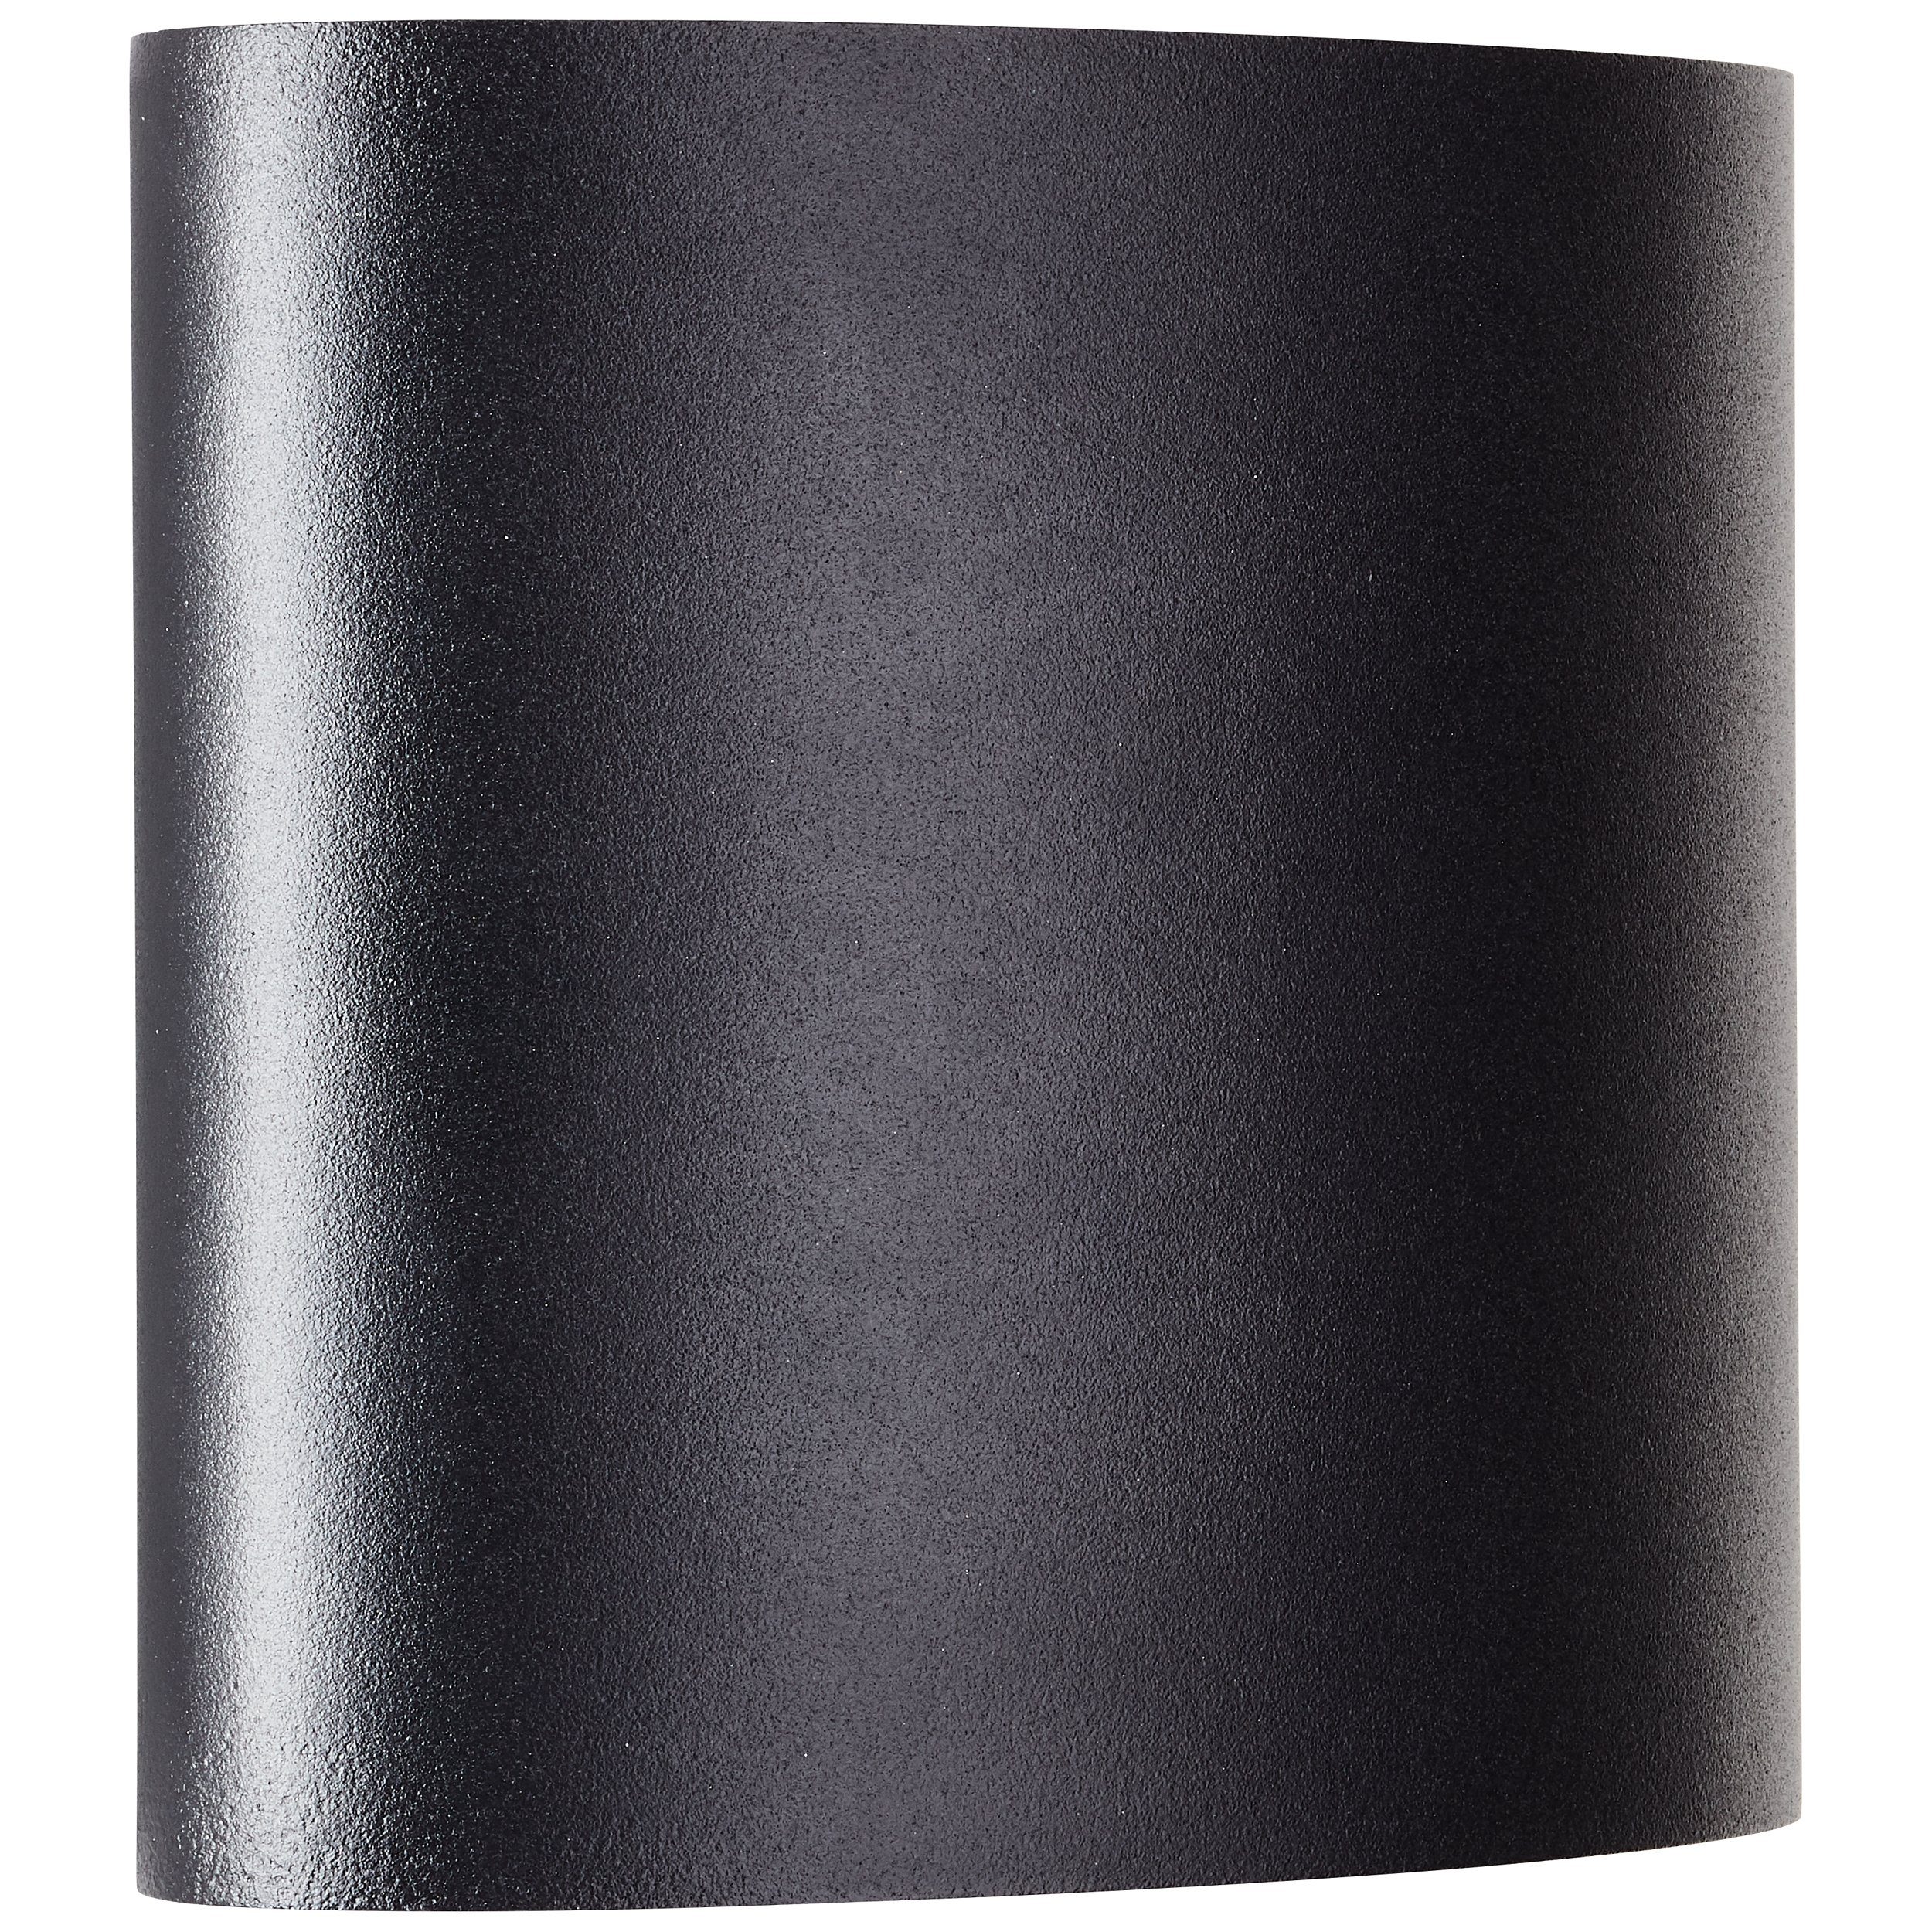 L schwarz, LED 4x Tursdale, Außenwandleuchte Außen-Wandleuchte Tursdale Aluminium/Kunststoff, Brilliant LED sand